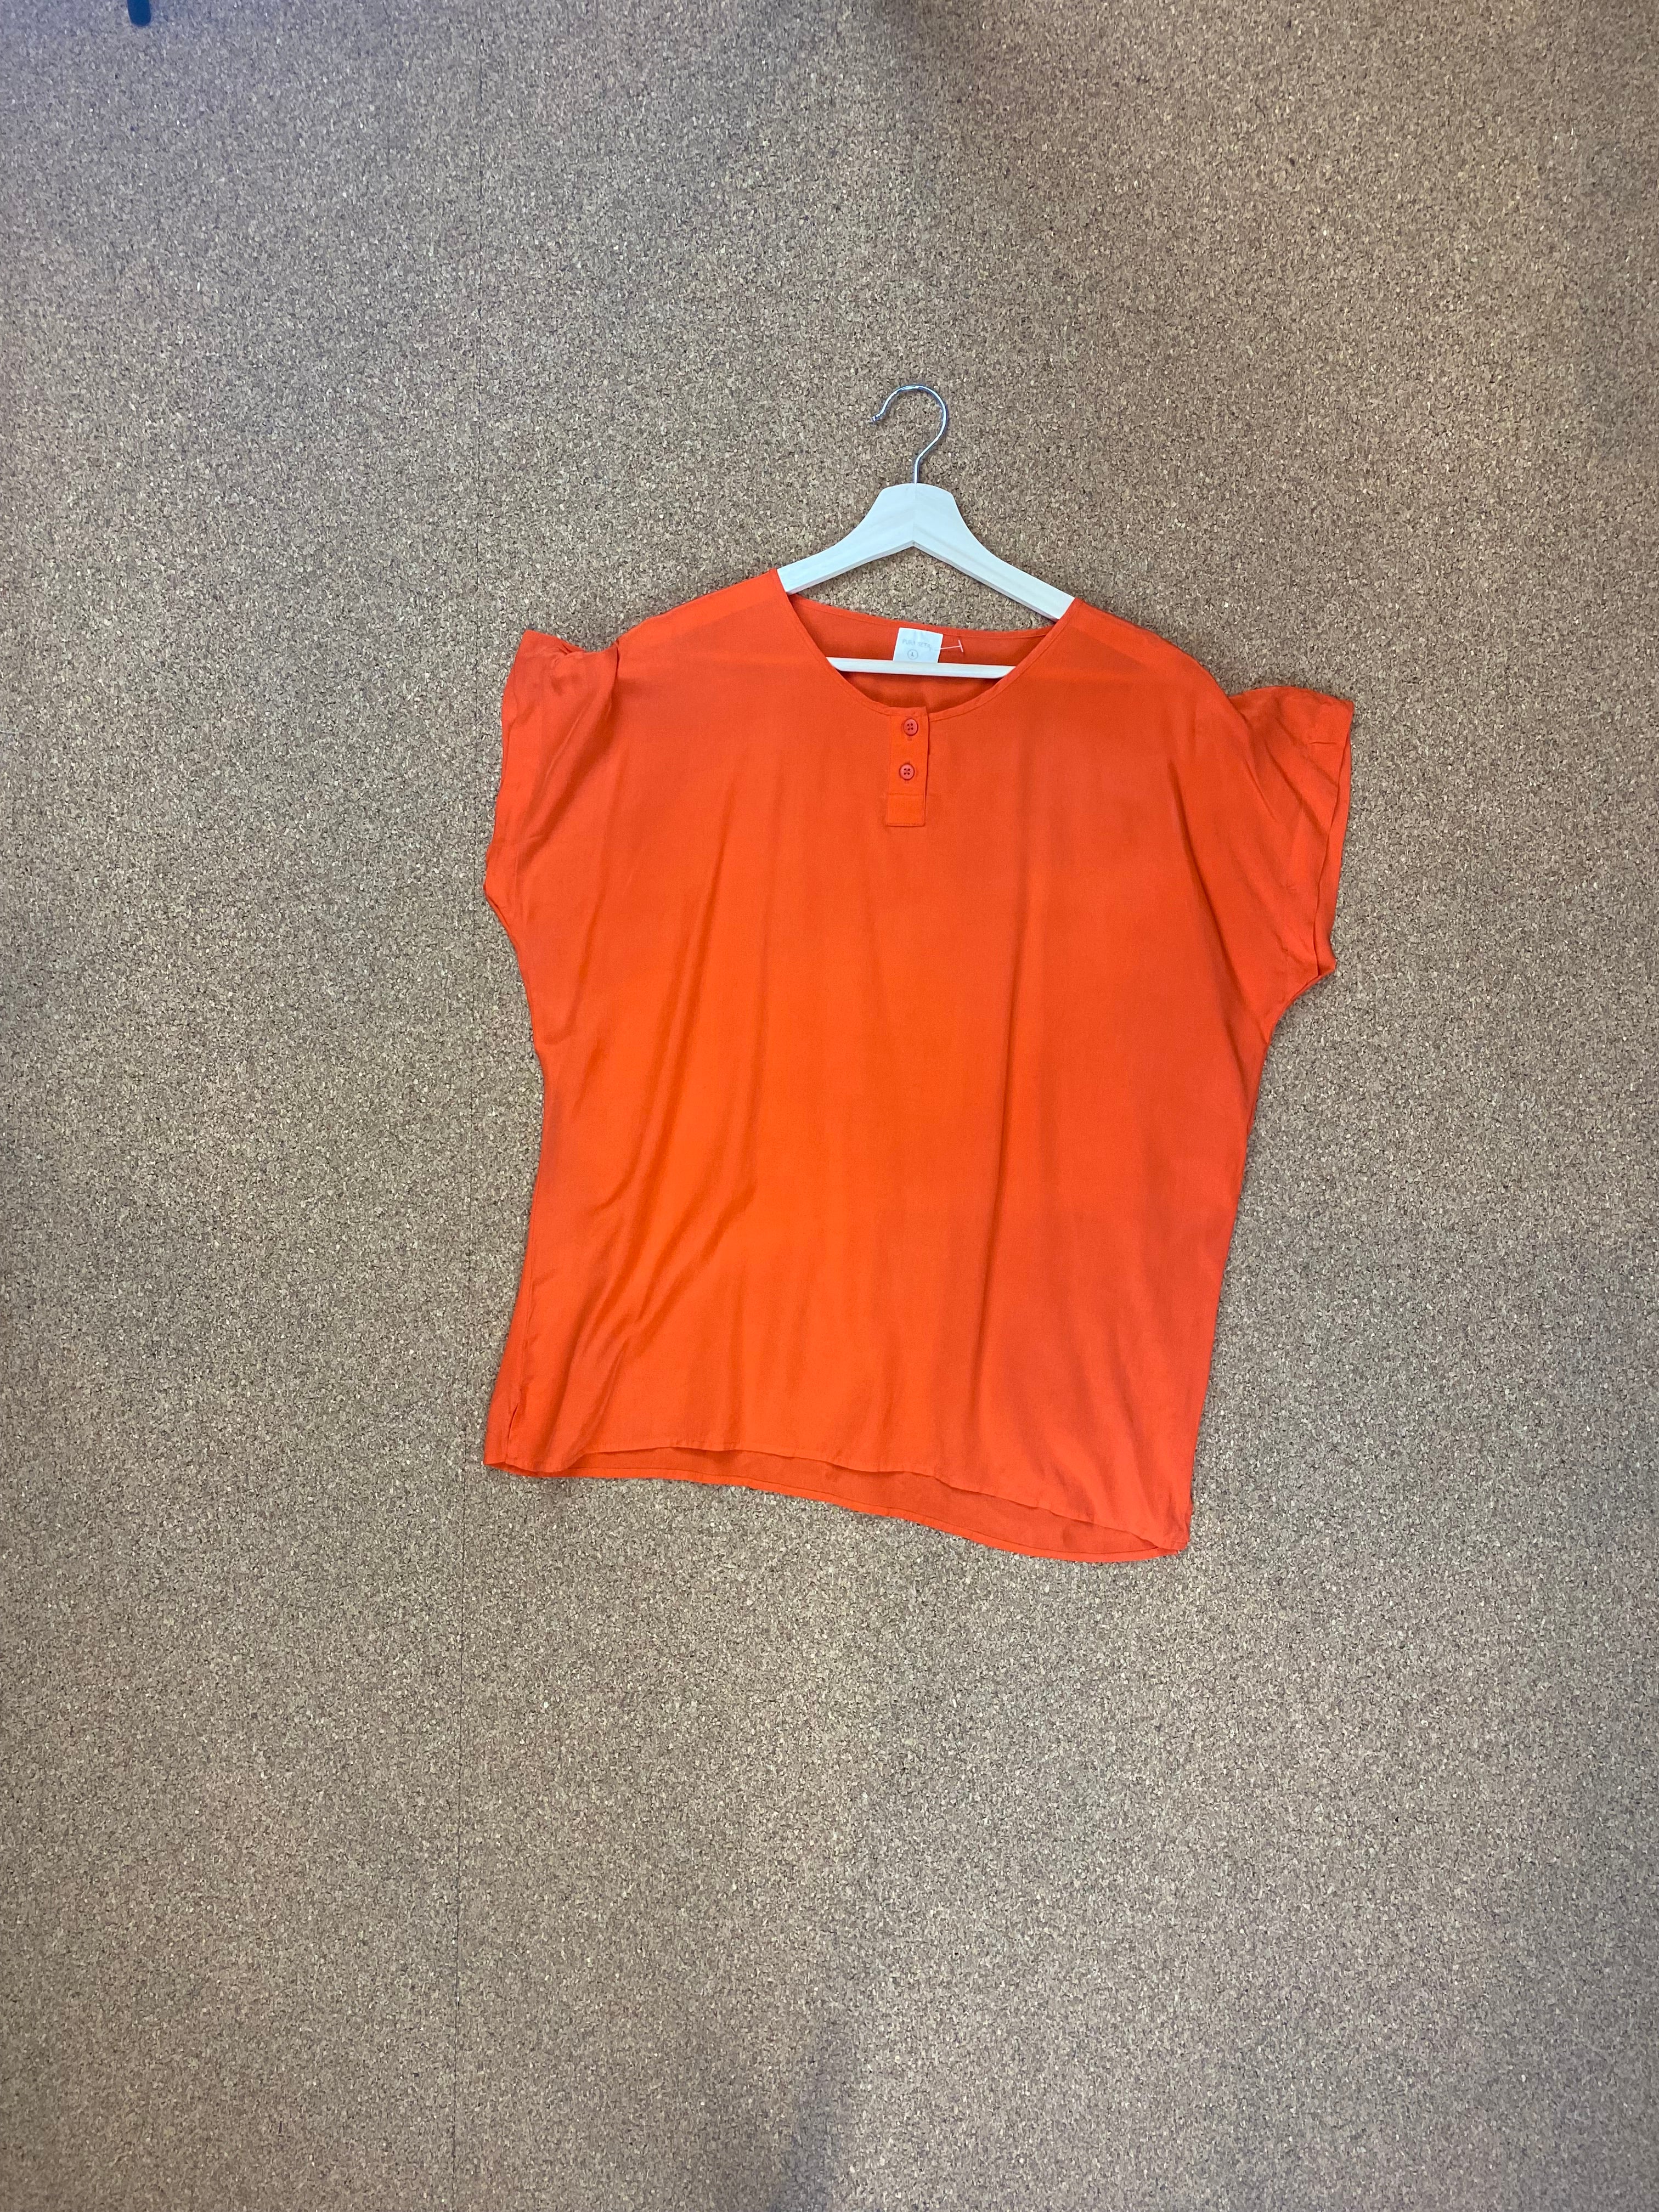 Orange Silk top Women's size L